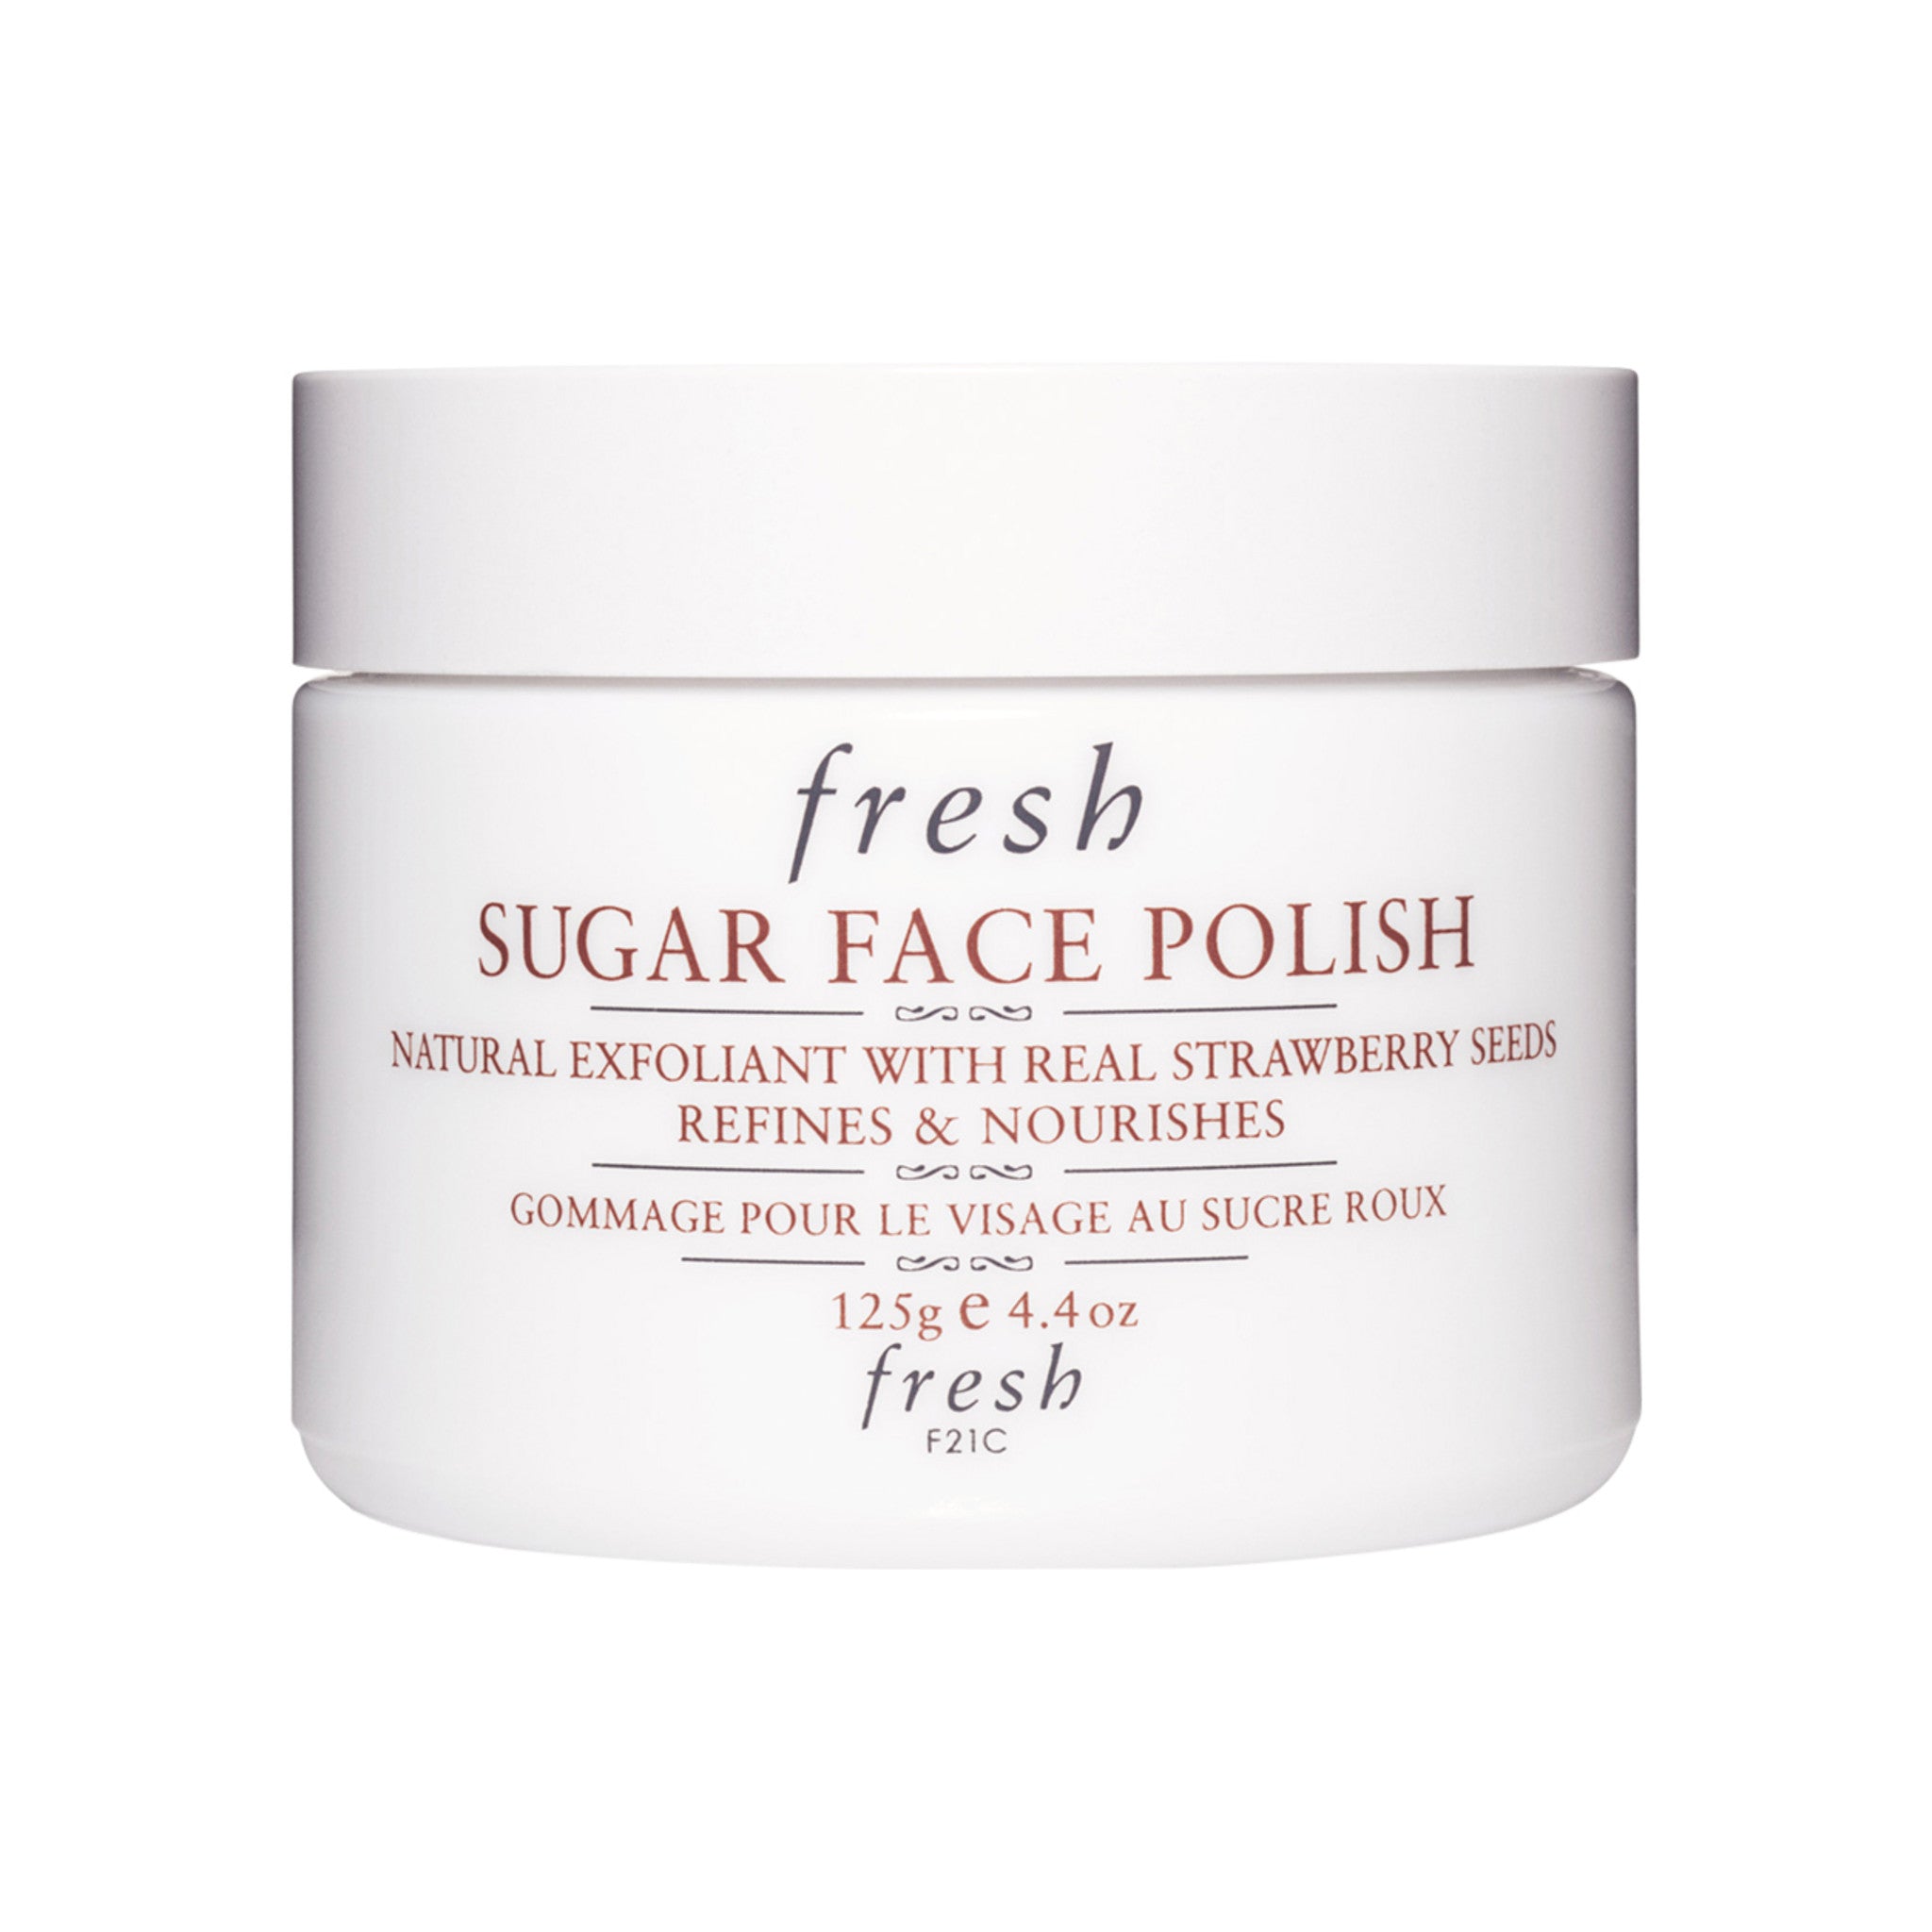 Fresh Sugar Face Polish Exfoliator main image.